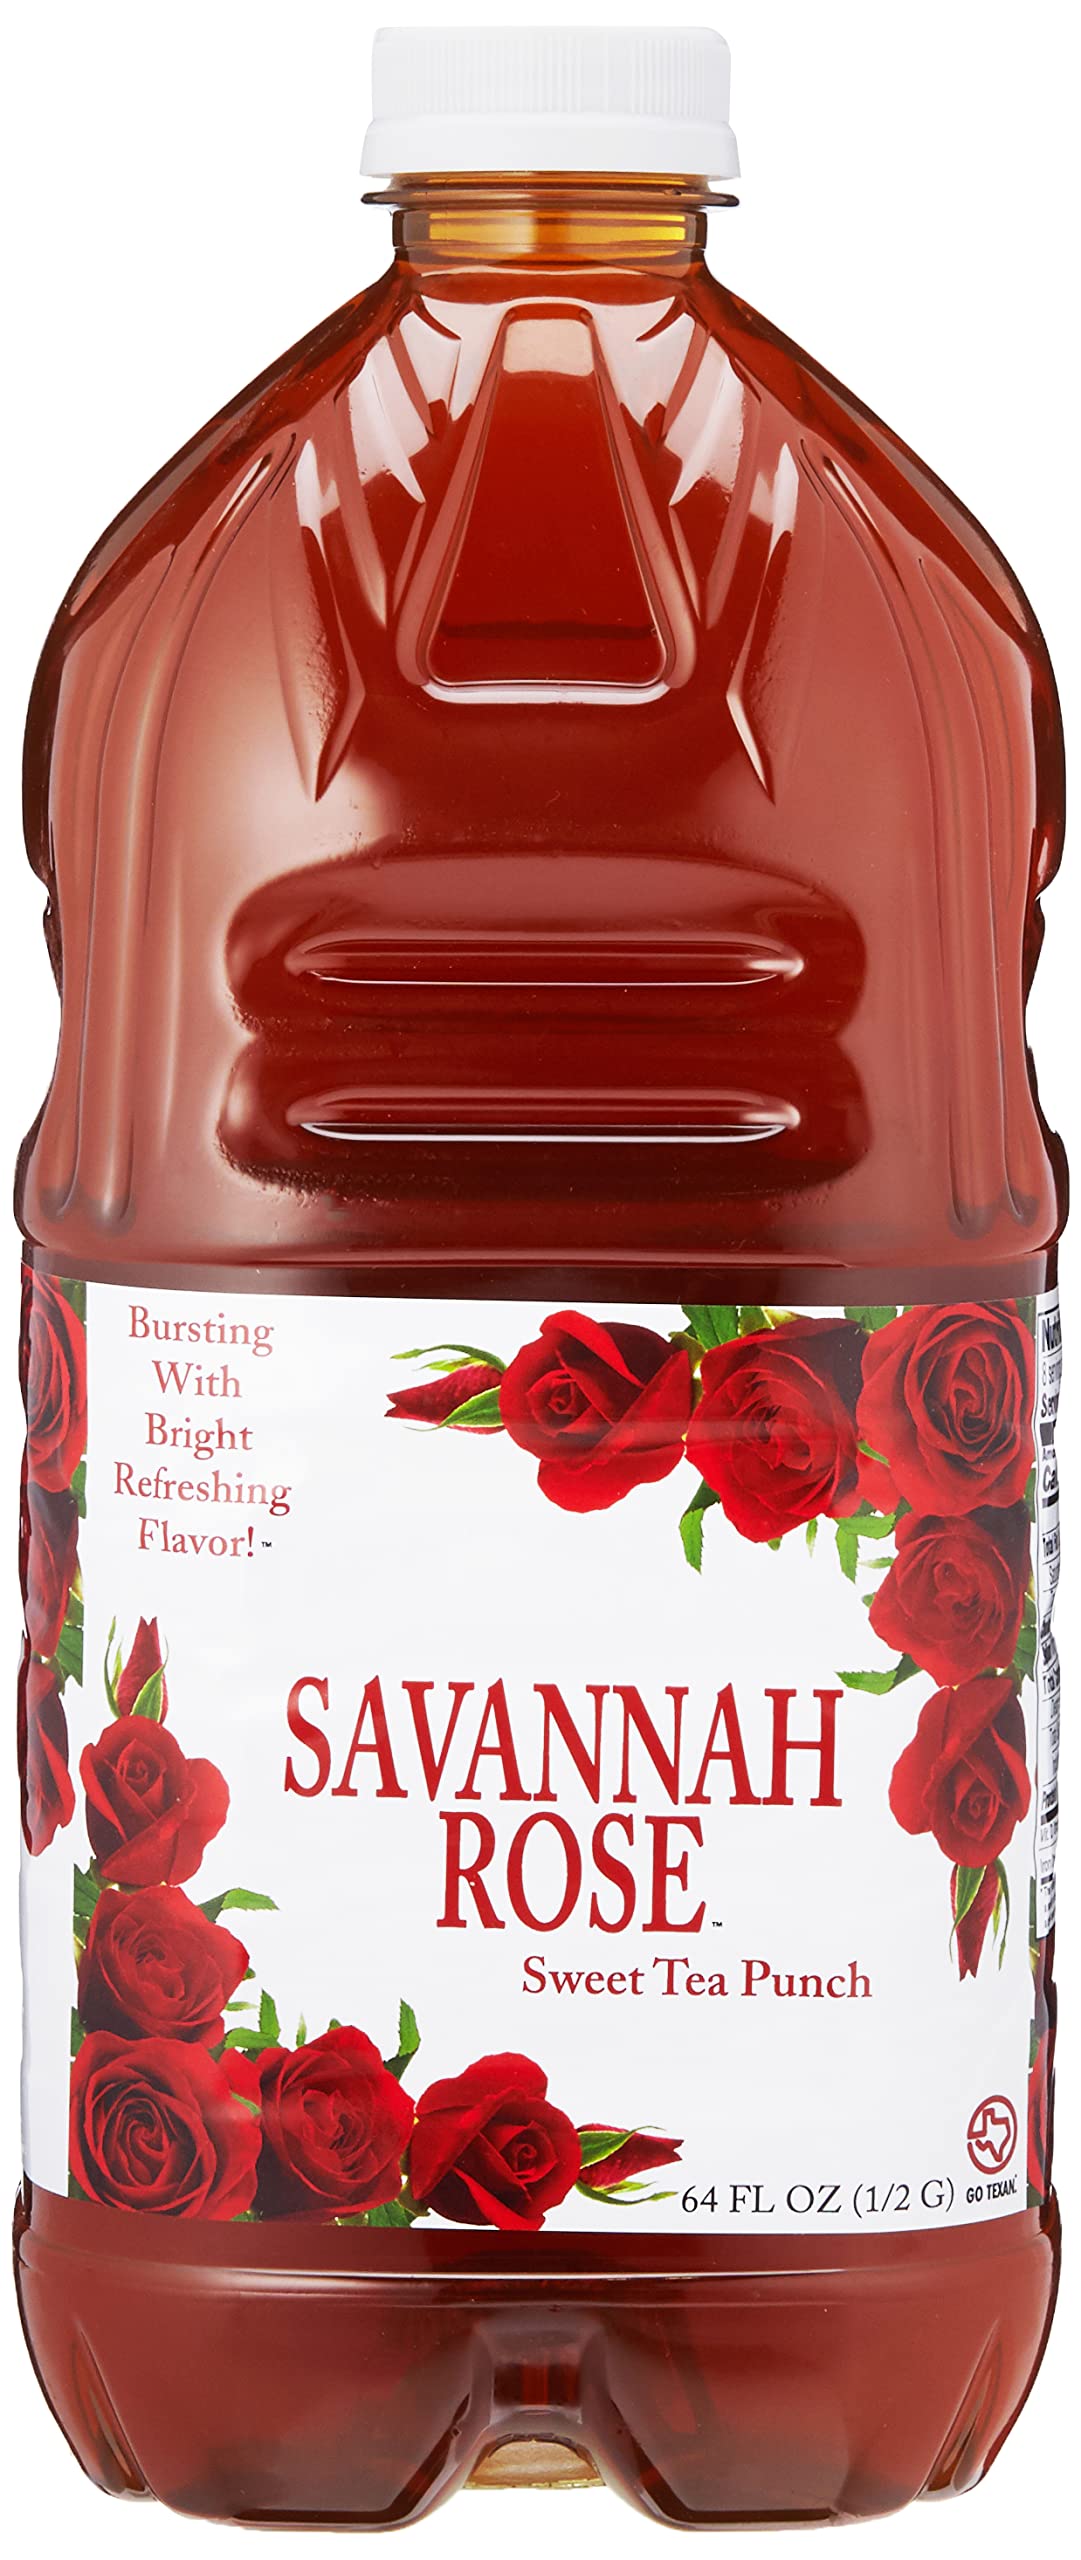 Savannah Rose Sweet Tea Punch, Black Tea, Natural Fruit Flavors, Real Cane Sugar, NO ARTIFICIAL FLAVORS 64 Oz.